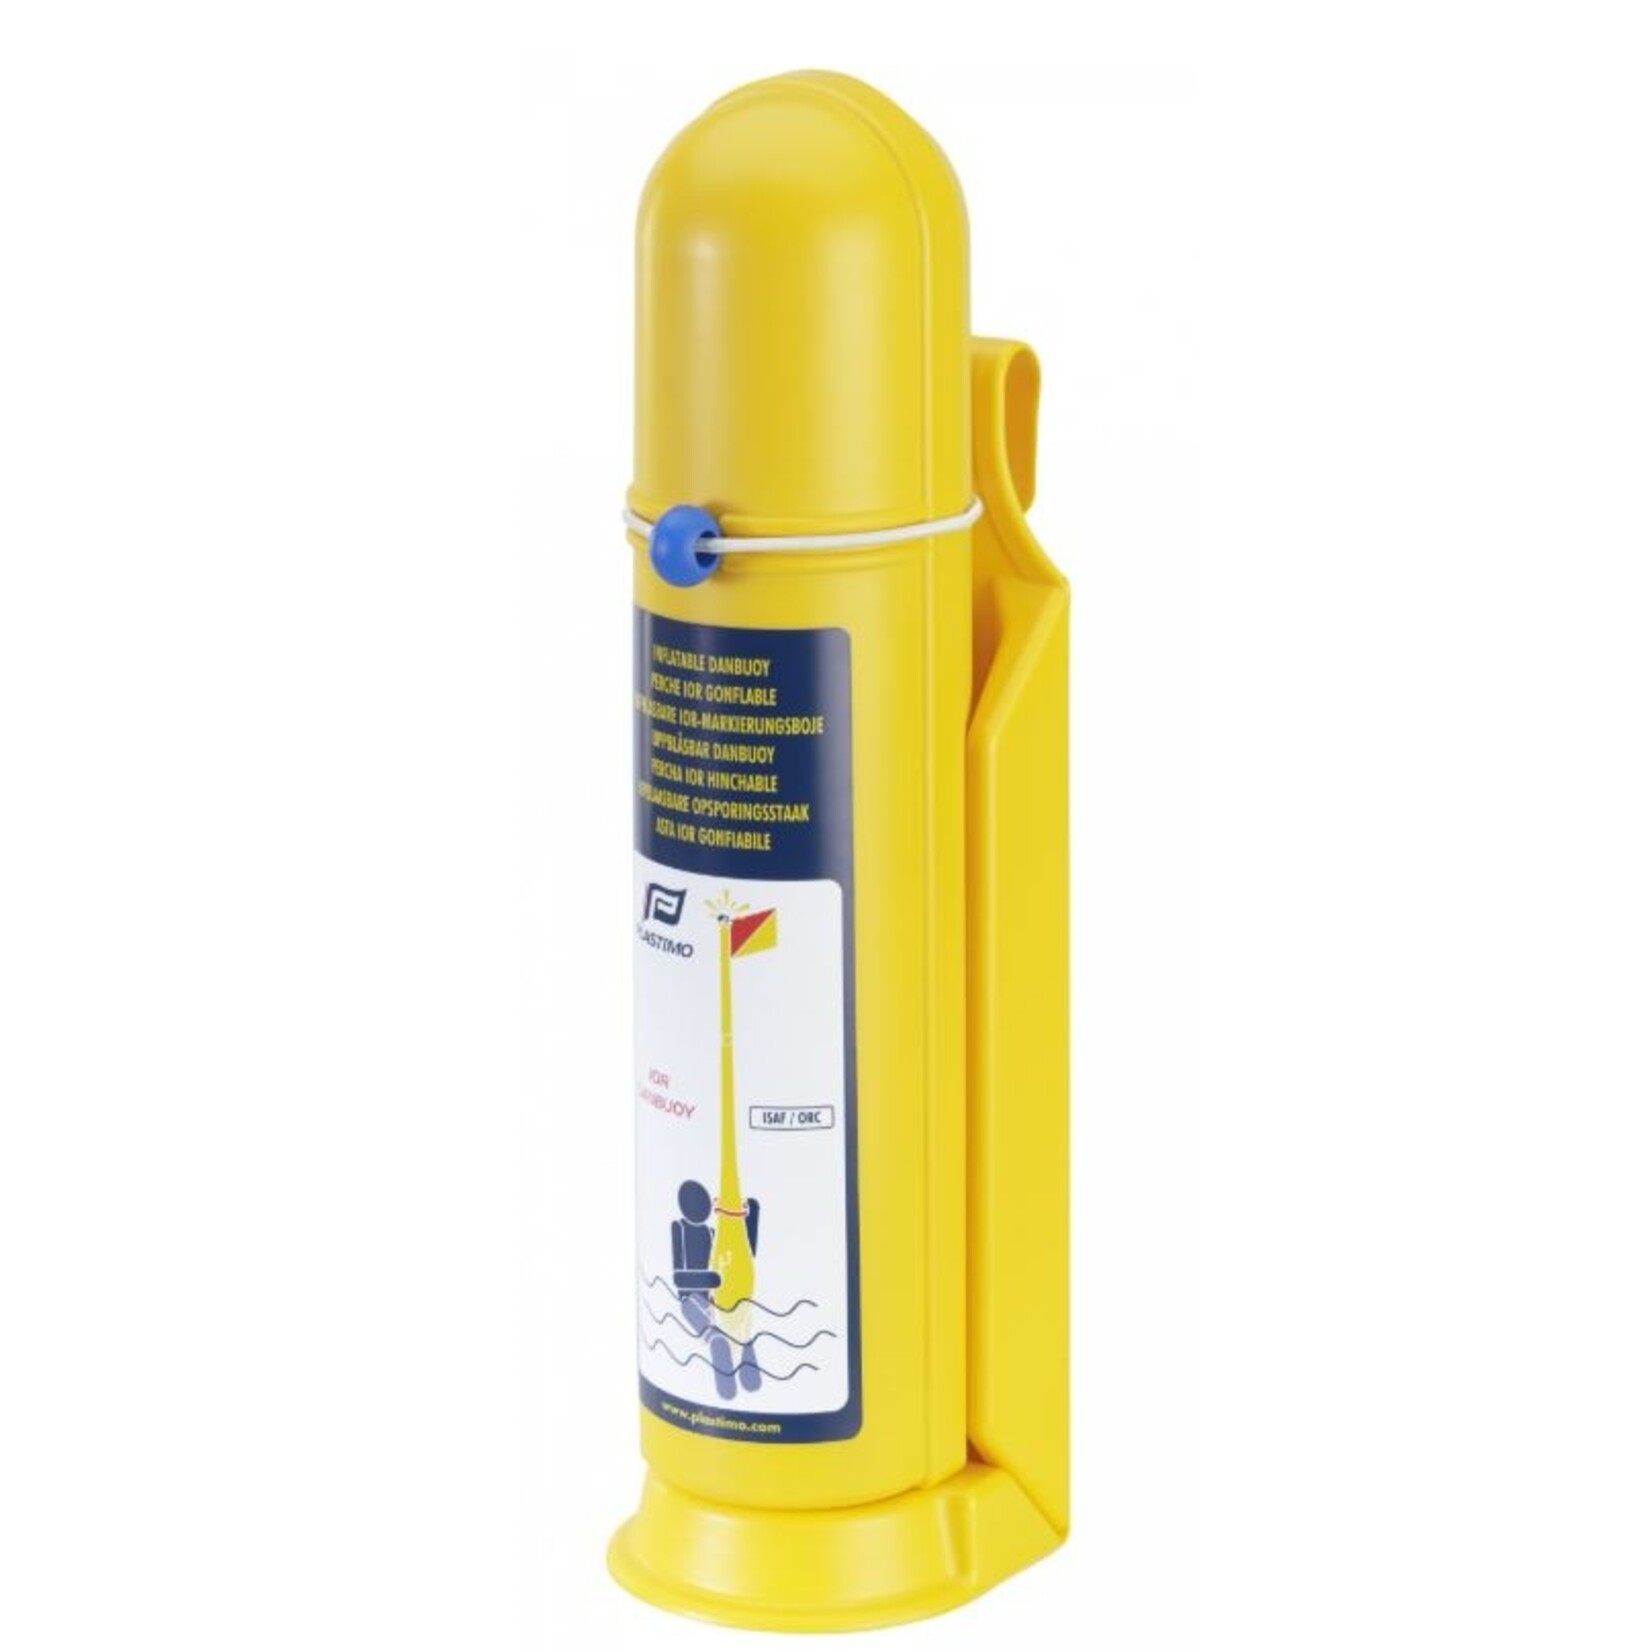 Plastimo Inflatable danbuoy yellow container